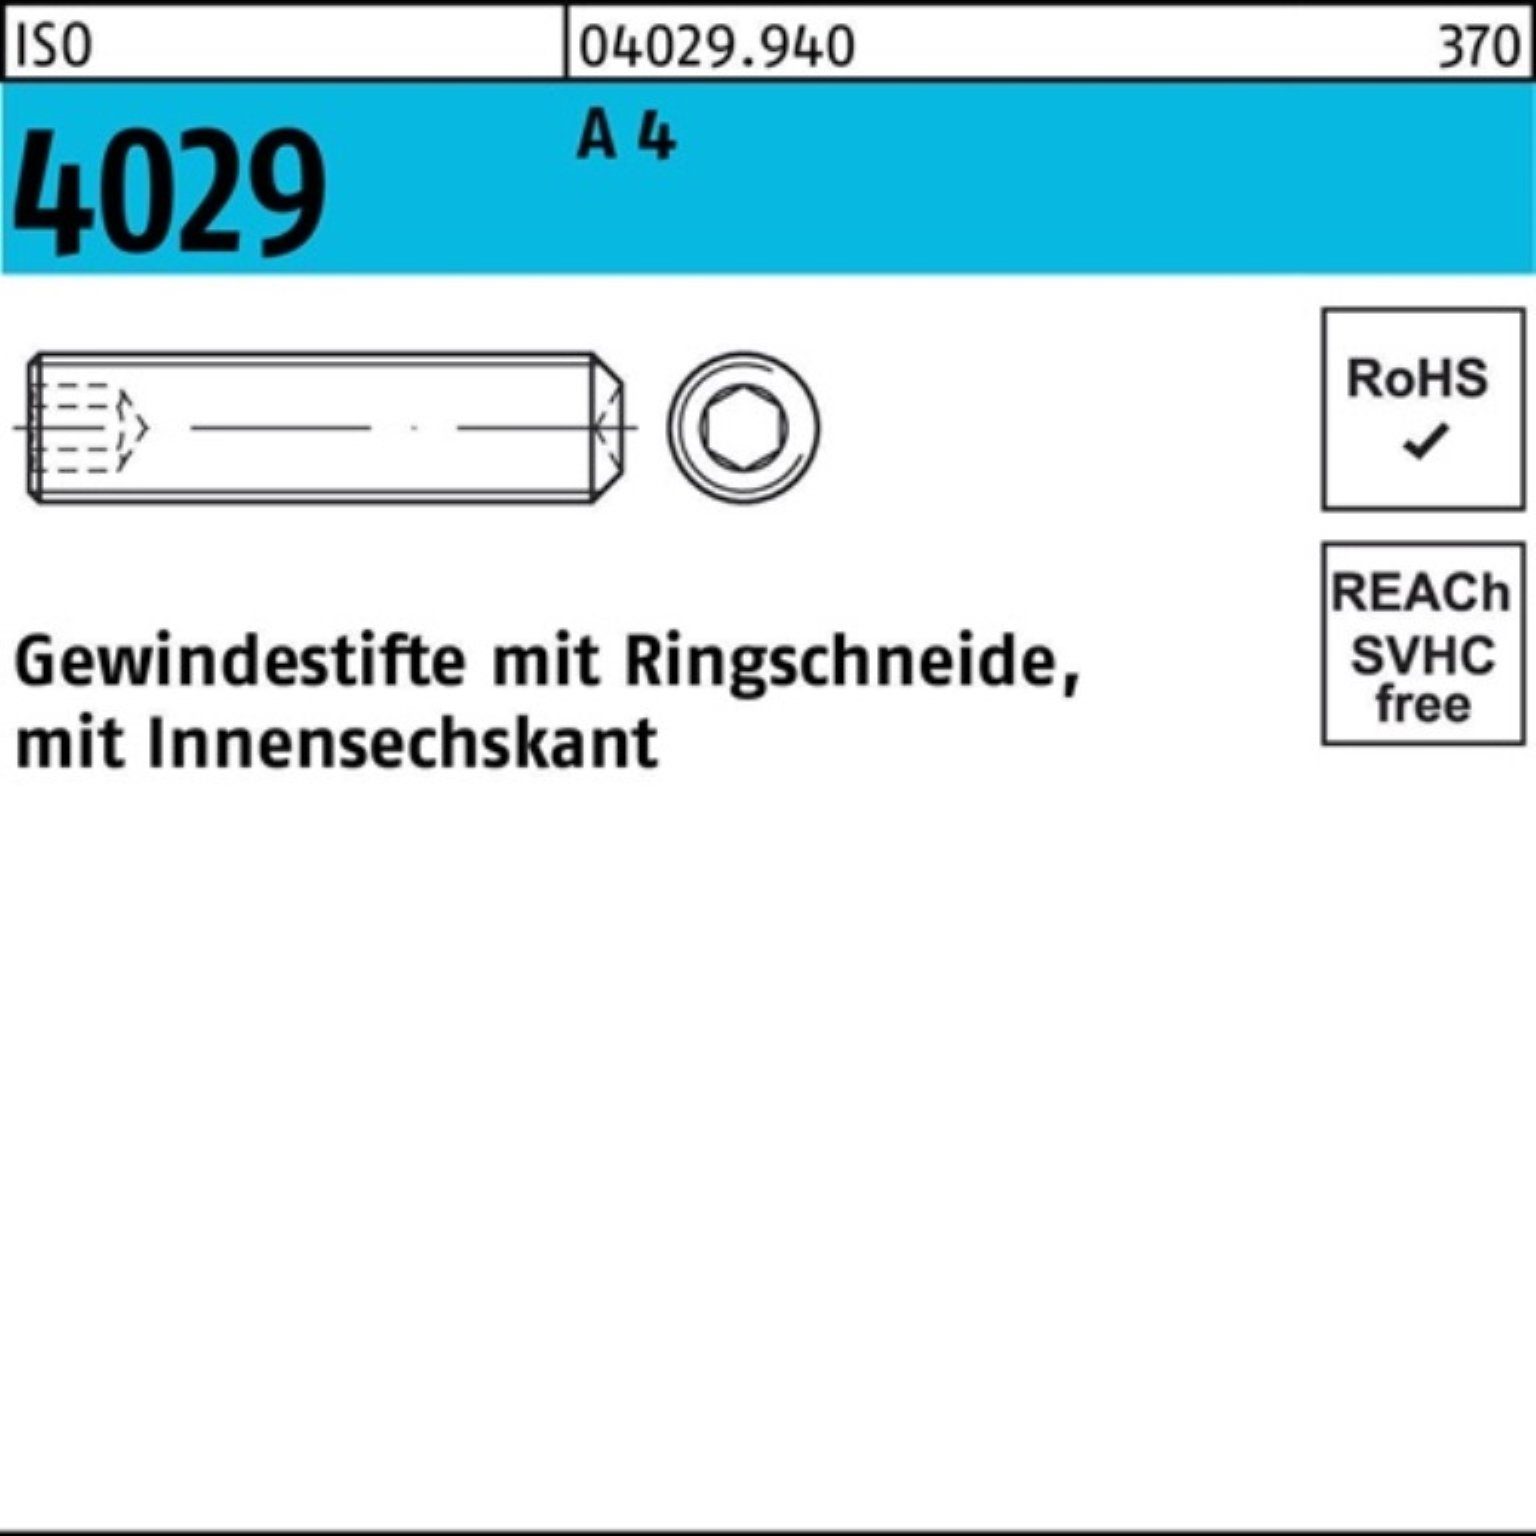 Ringschneide/Innen-6kt Pack Gewindestift Gewindebolzen 500 500er 4 Reyher A M5x 4029 ISO 16